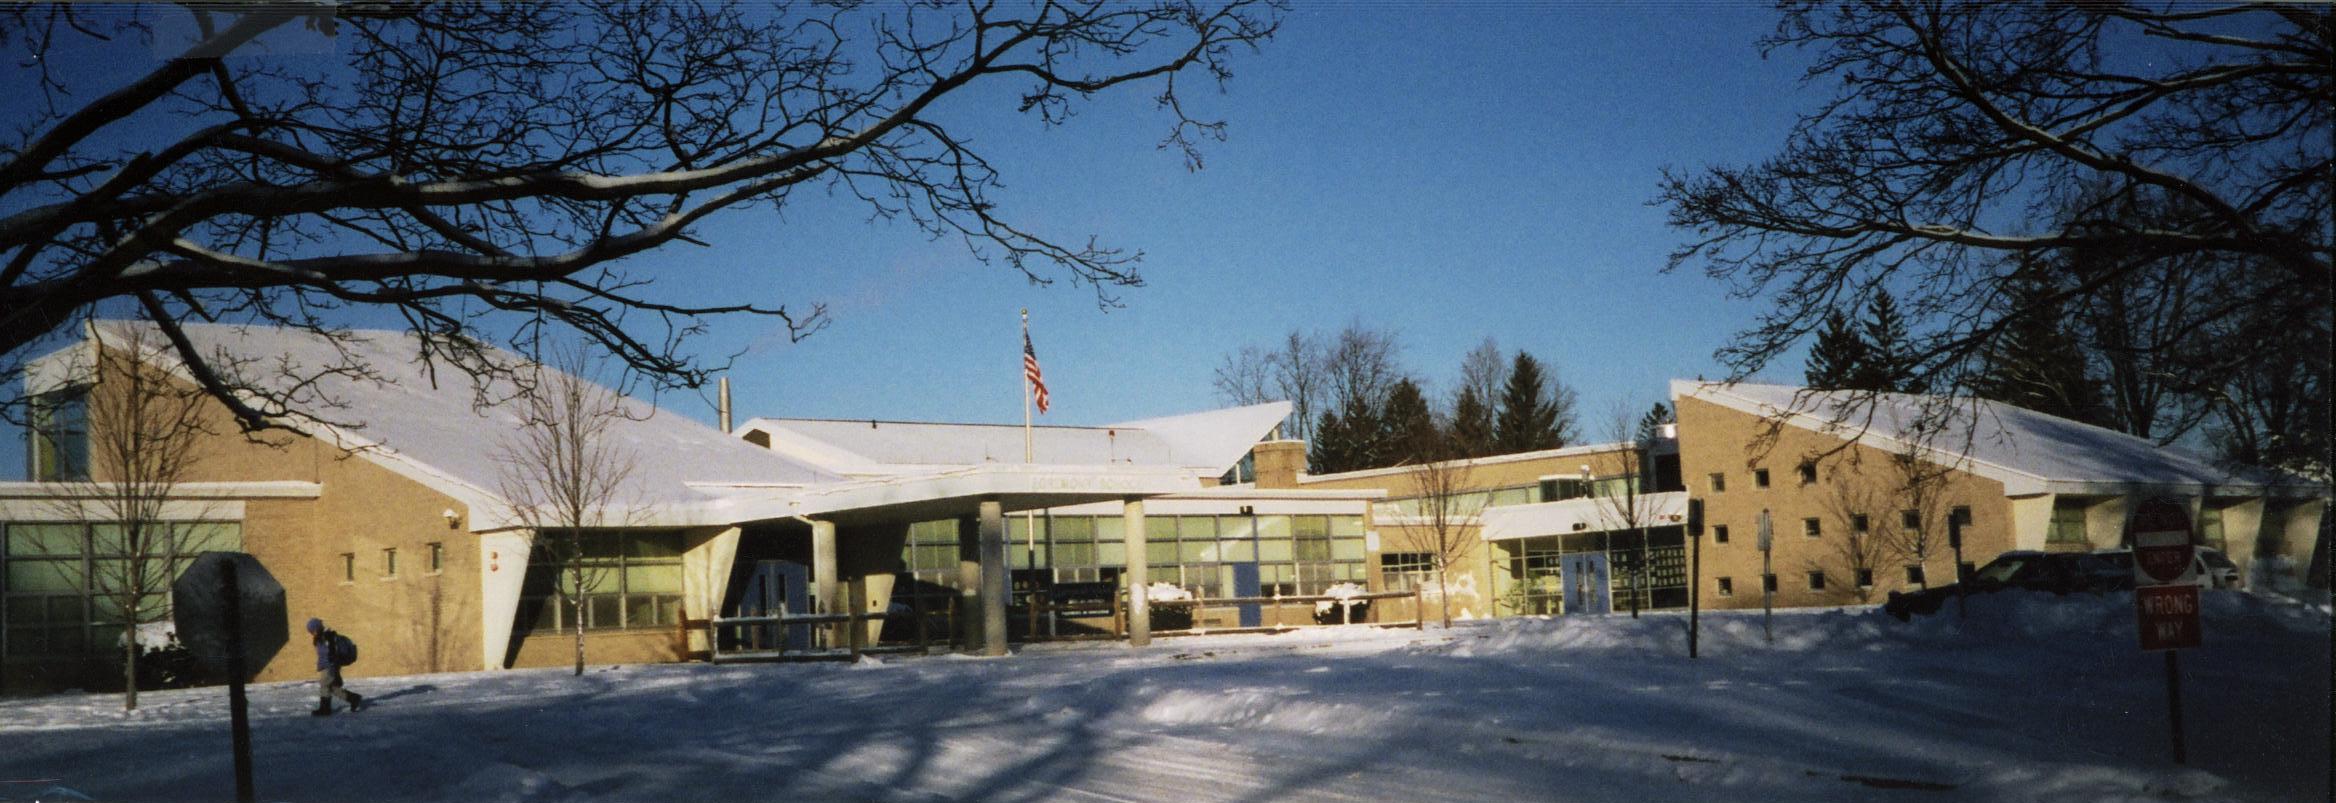  Egremont Elementary School, Pittsfield, Massachusetts 